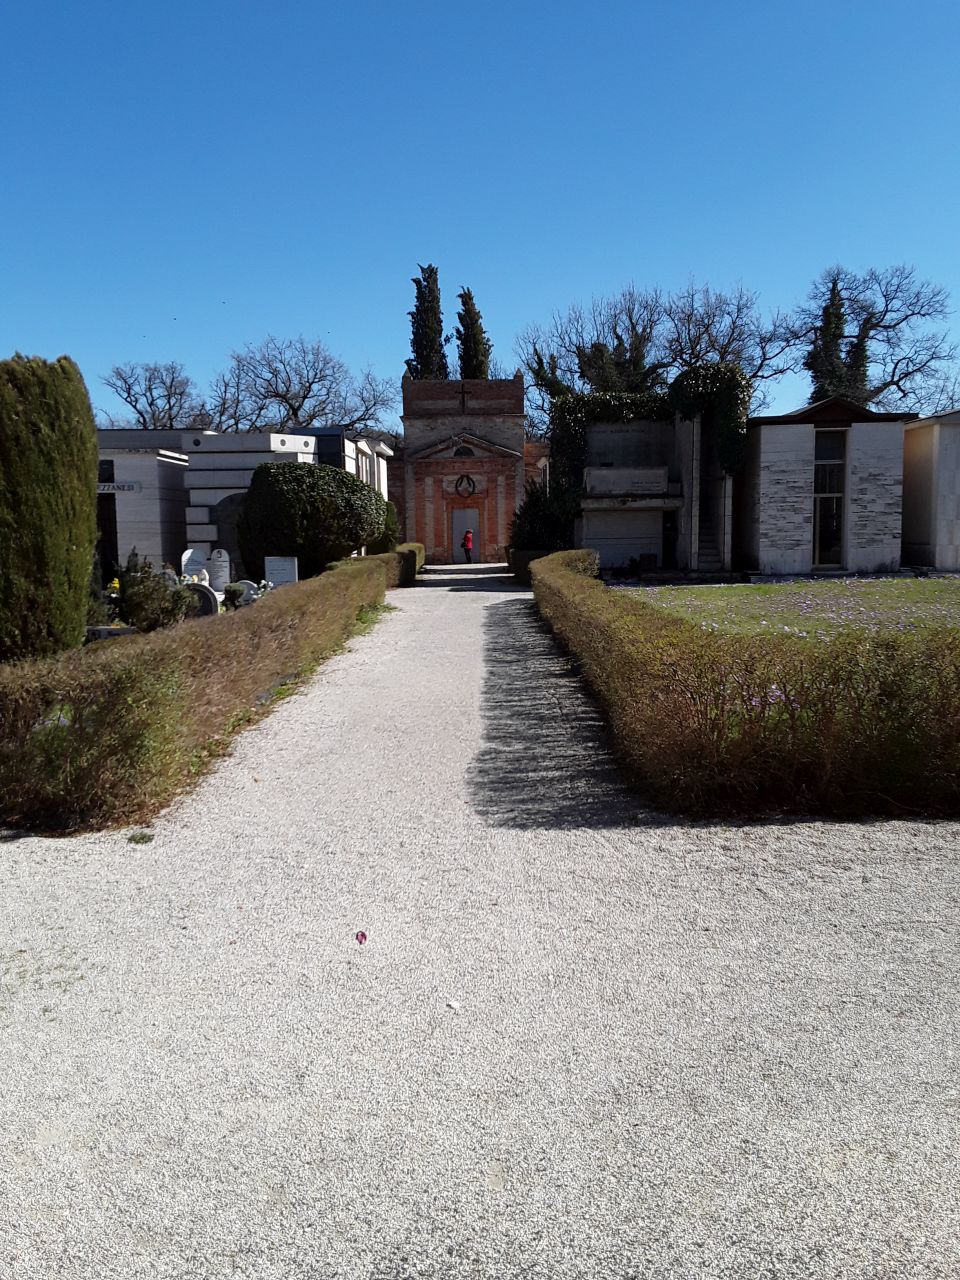 Chiesa del cimitero di Urbisaglia (chiesa, cimiteriale) - Urbisaglia (MC) 